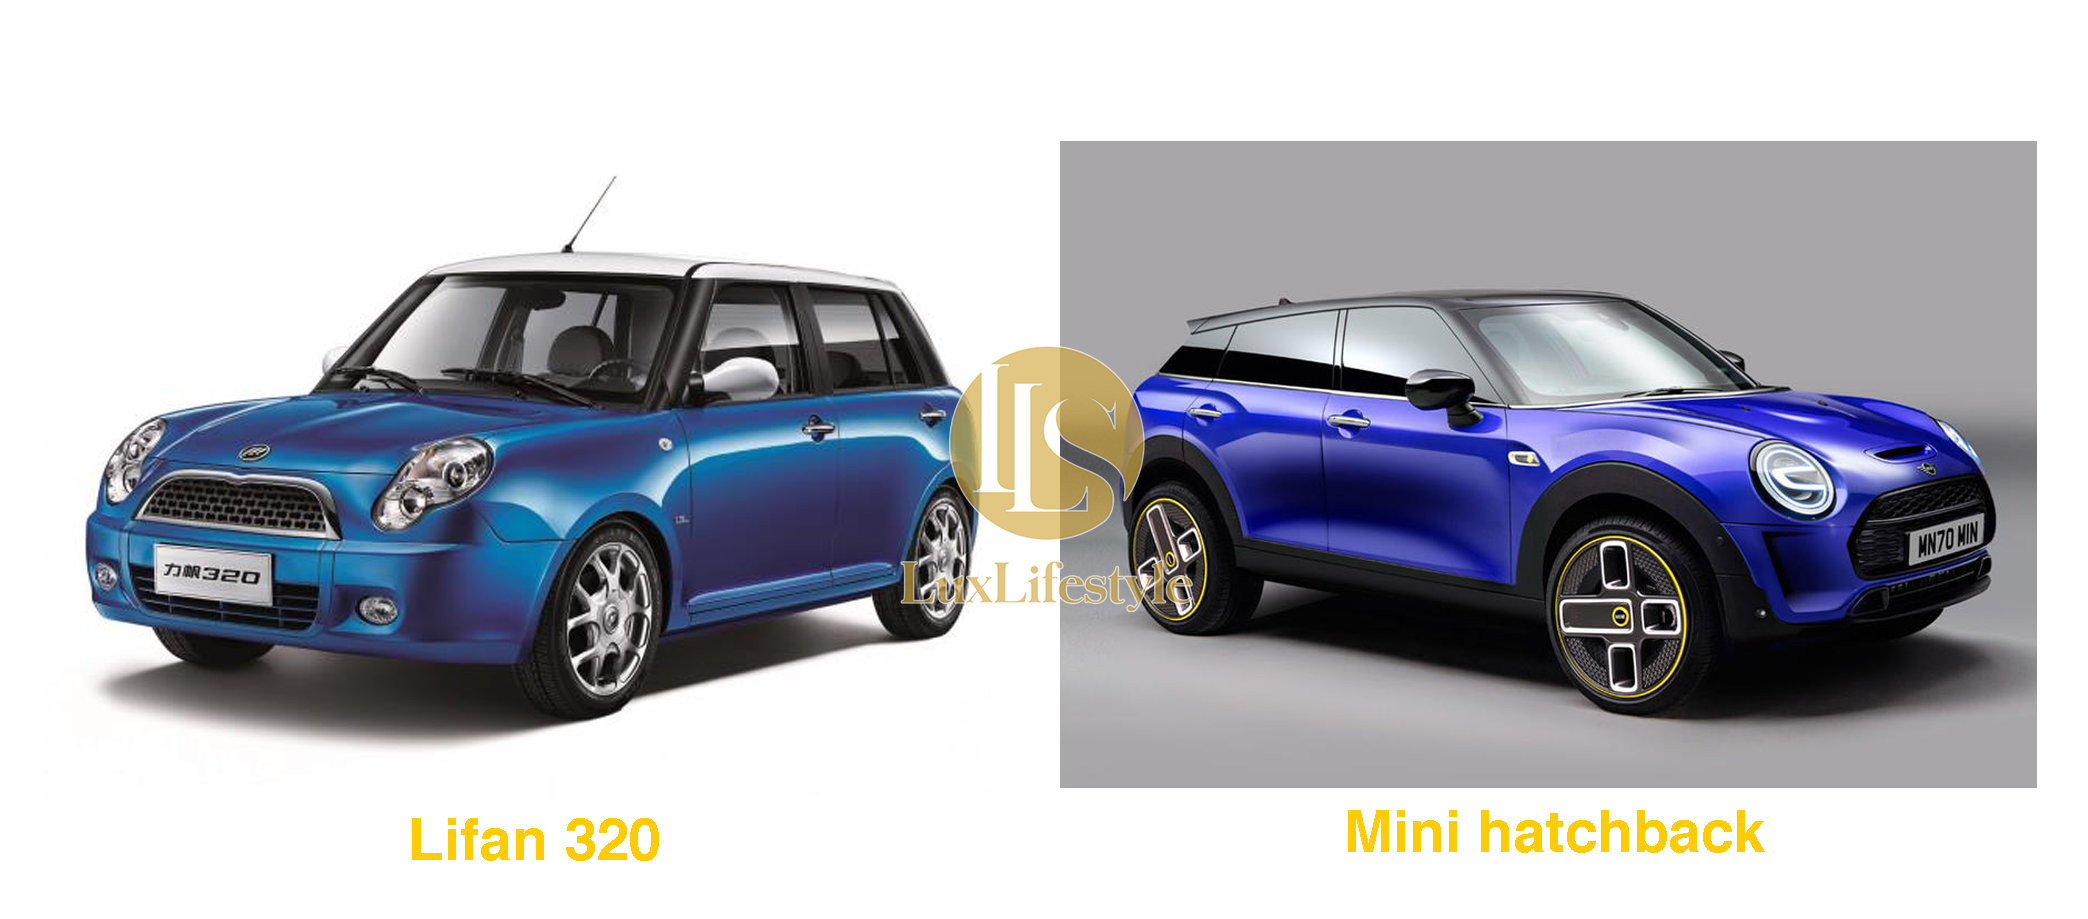 lux-lifan-320-va-mini-hatchback-1641822559.png